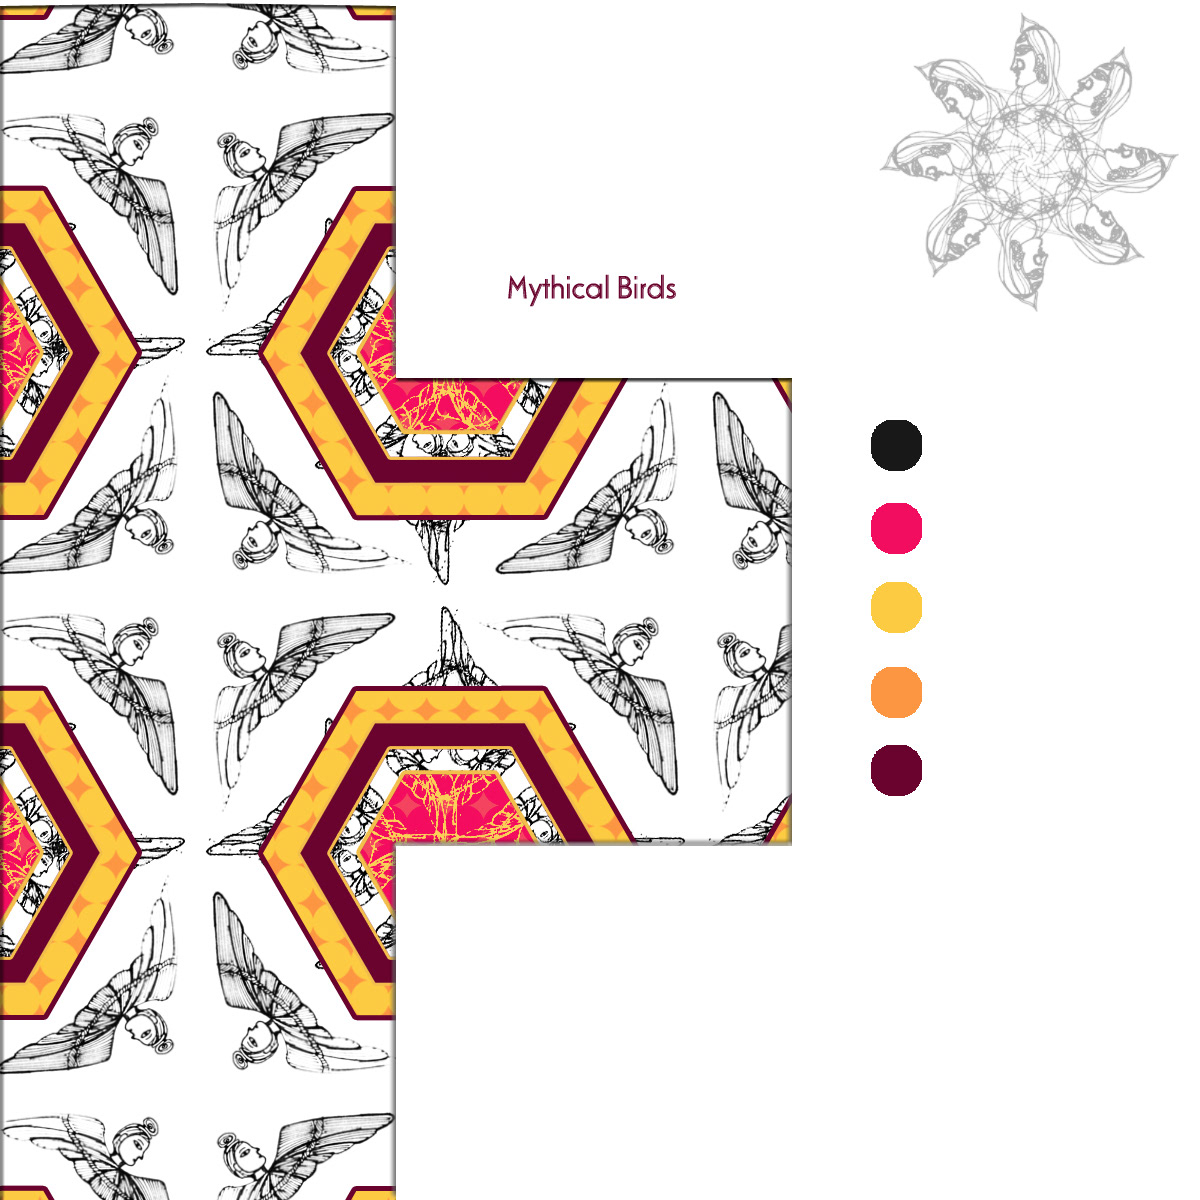 India Textiles Patterns designs